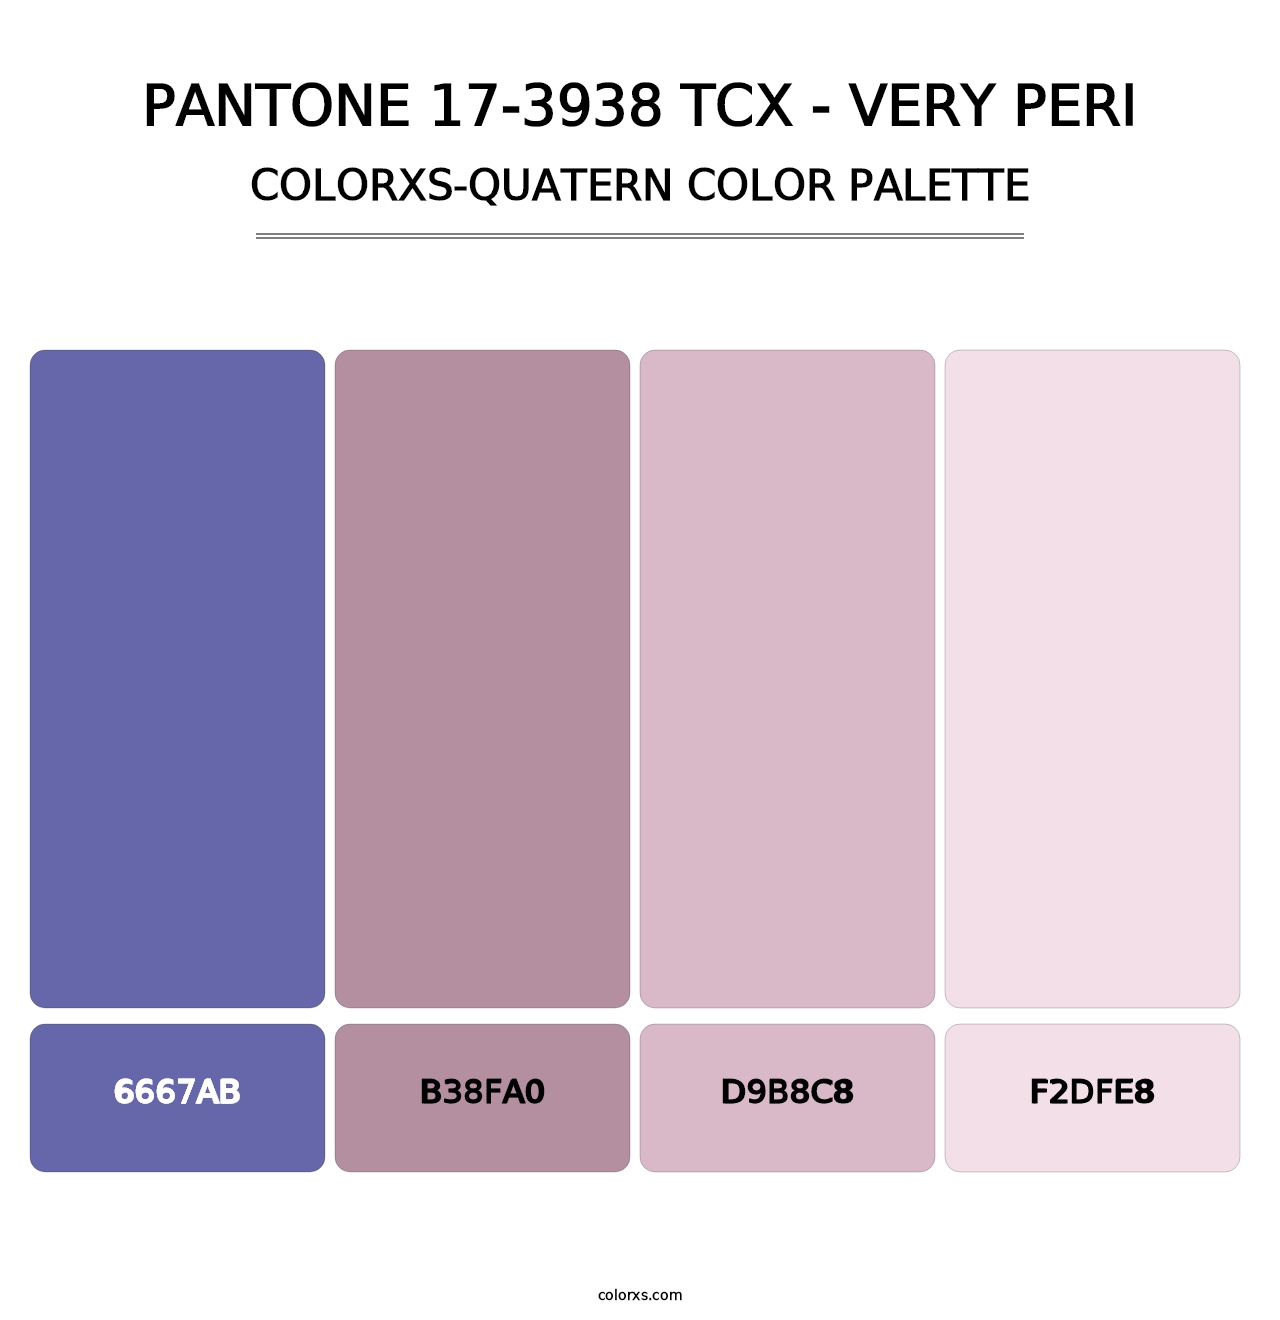 PANTONE 17-3938 TCX - Very Peri - Colorxs Quatern Palette